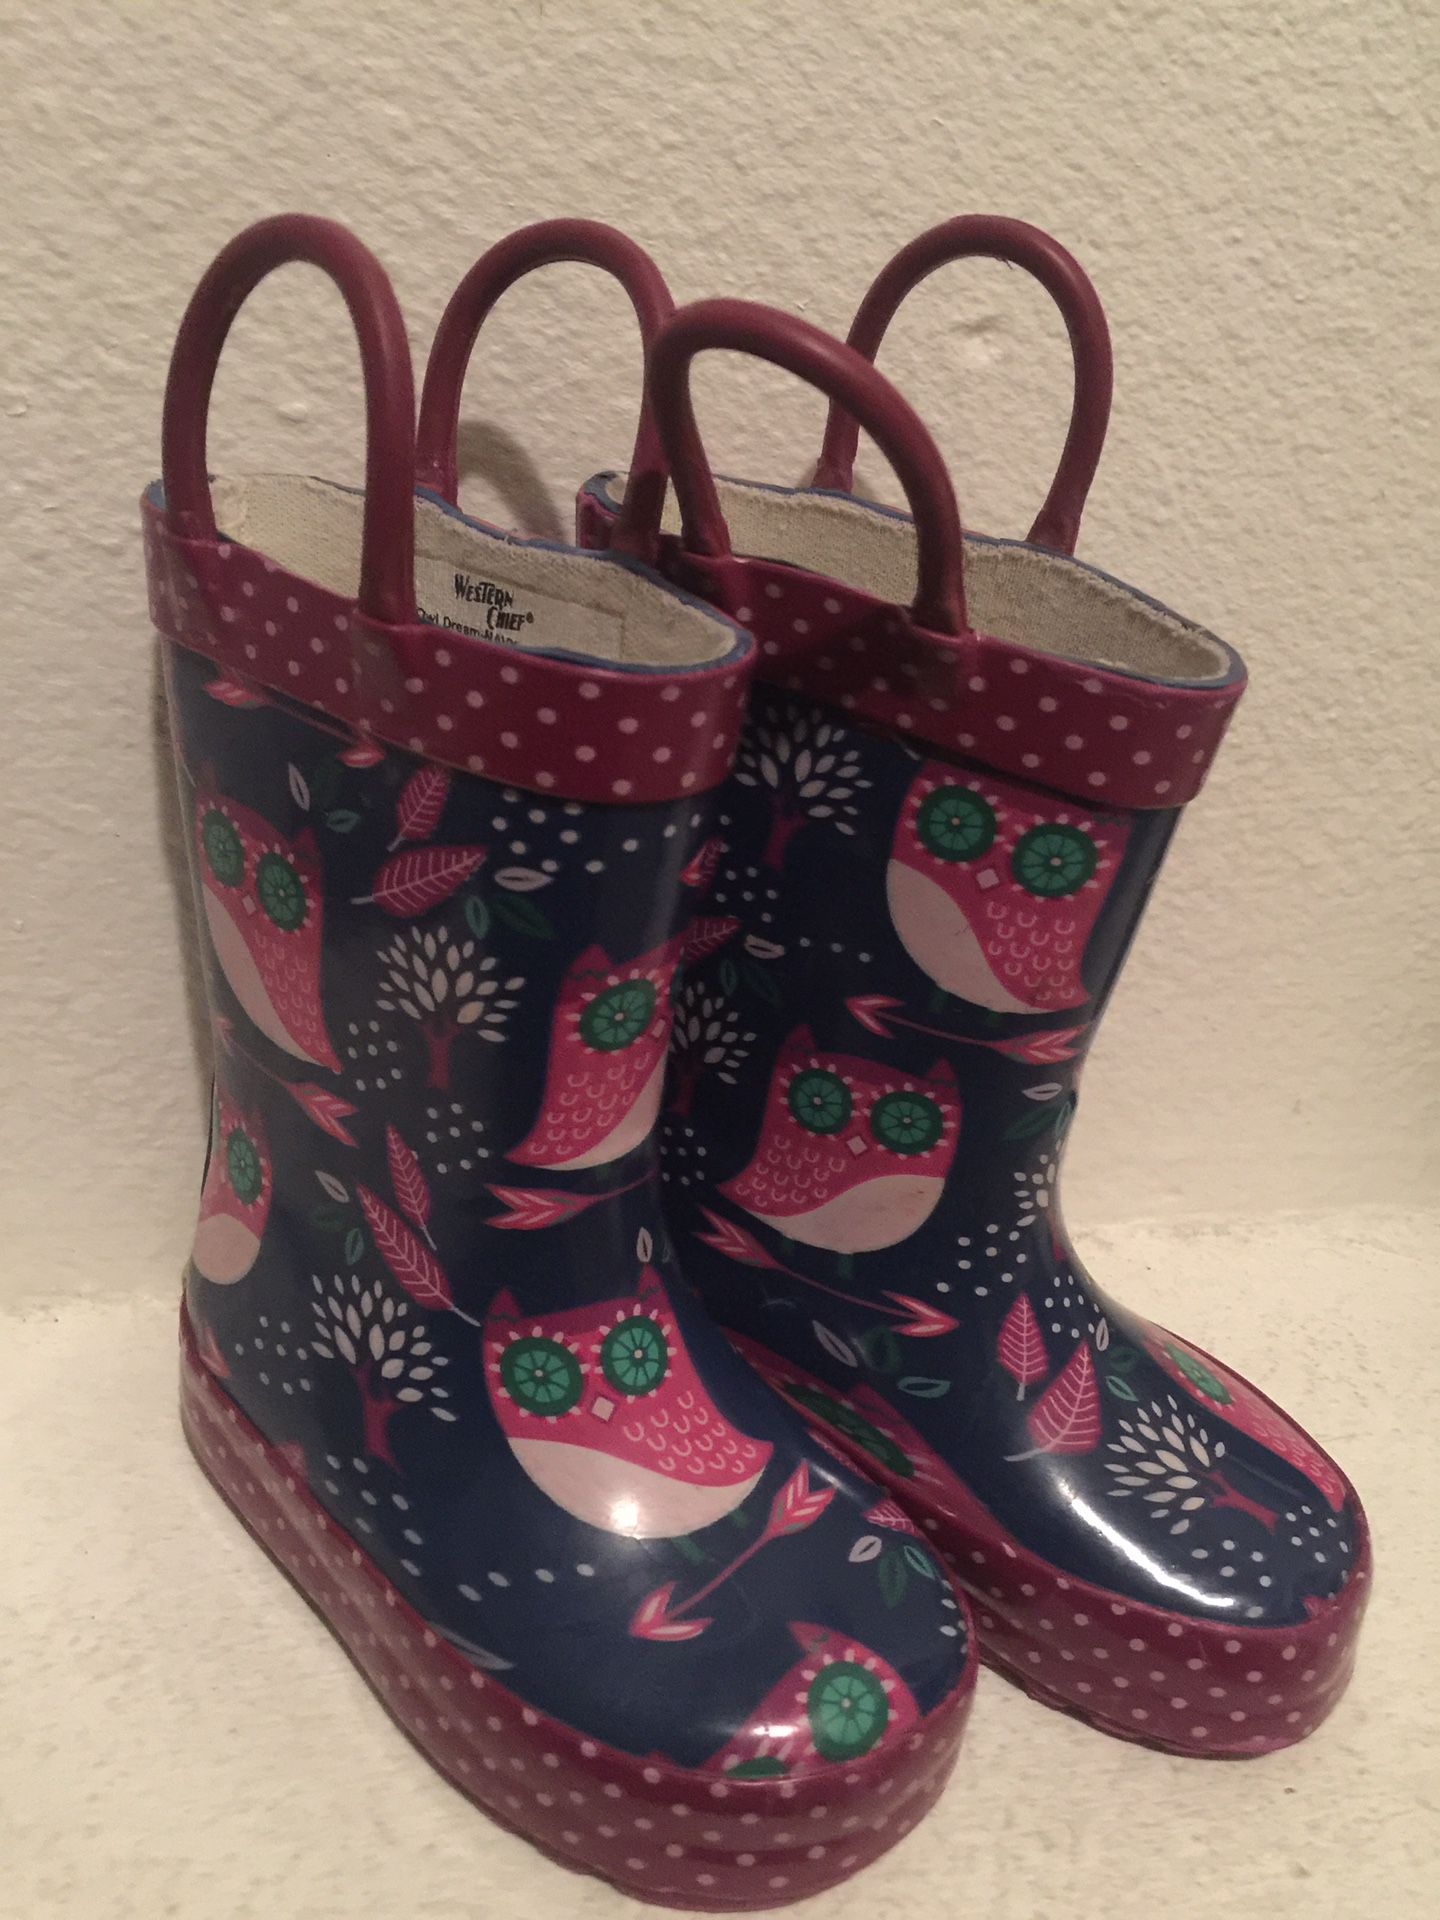 5c Owl rain boots